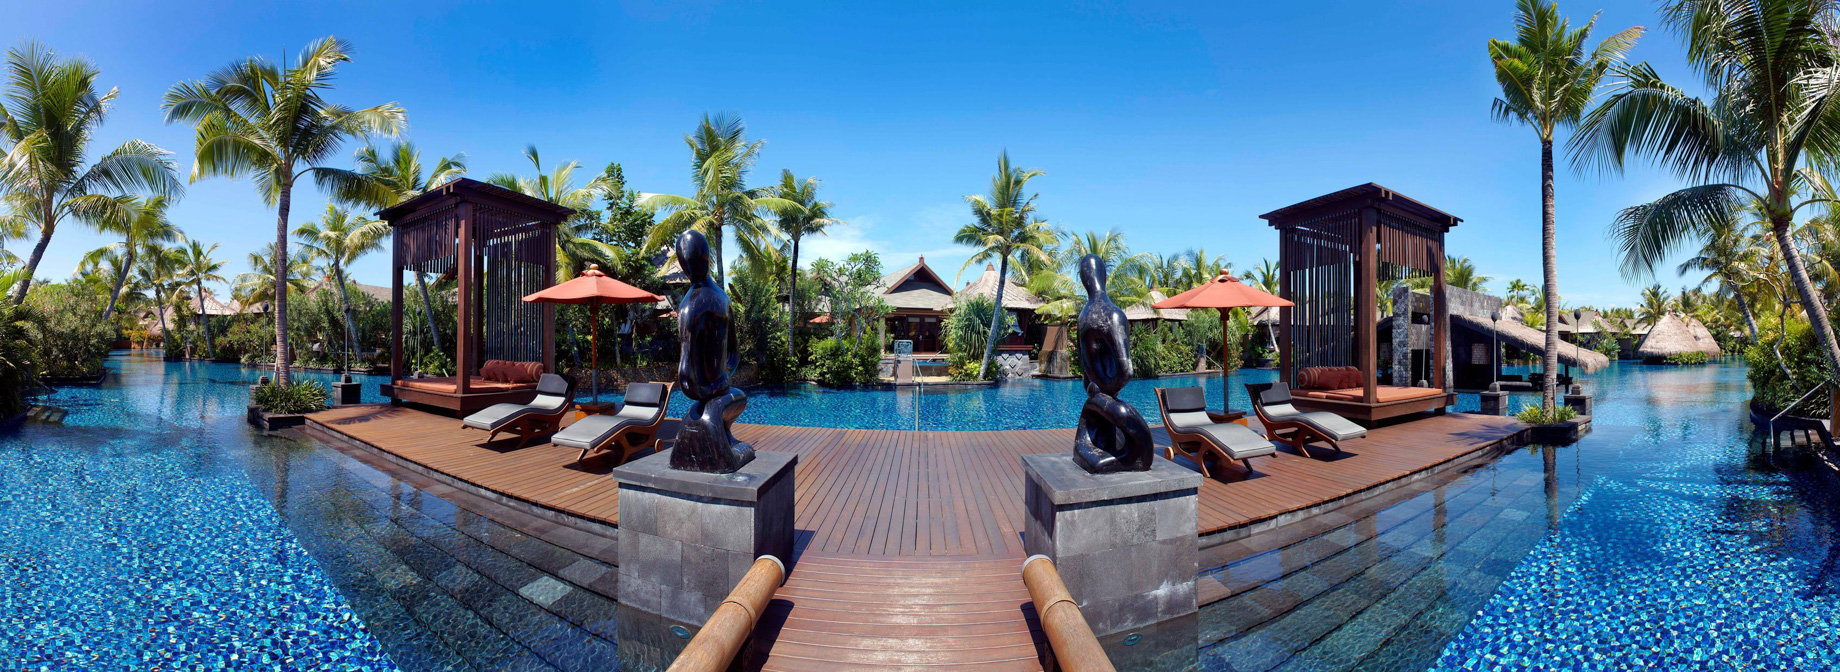 The St. Regis Bali Resort – Bali, Indonesia – Lagoon Deck Panorama View